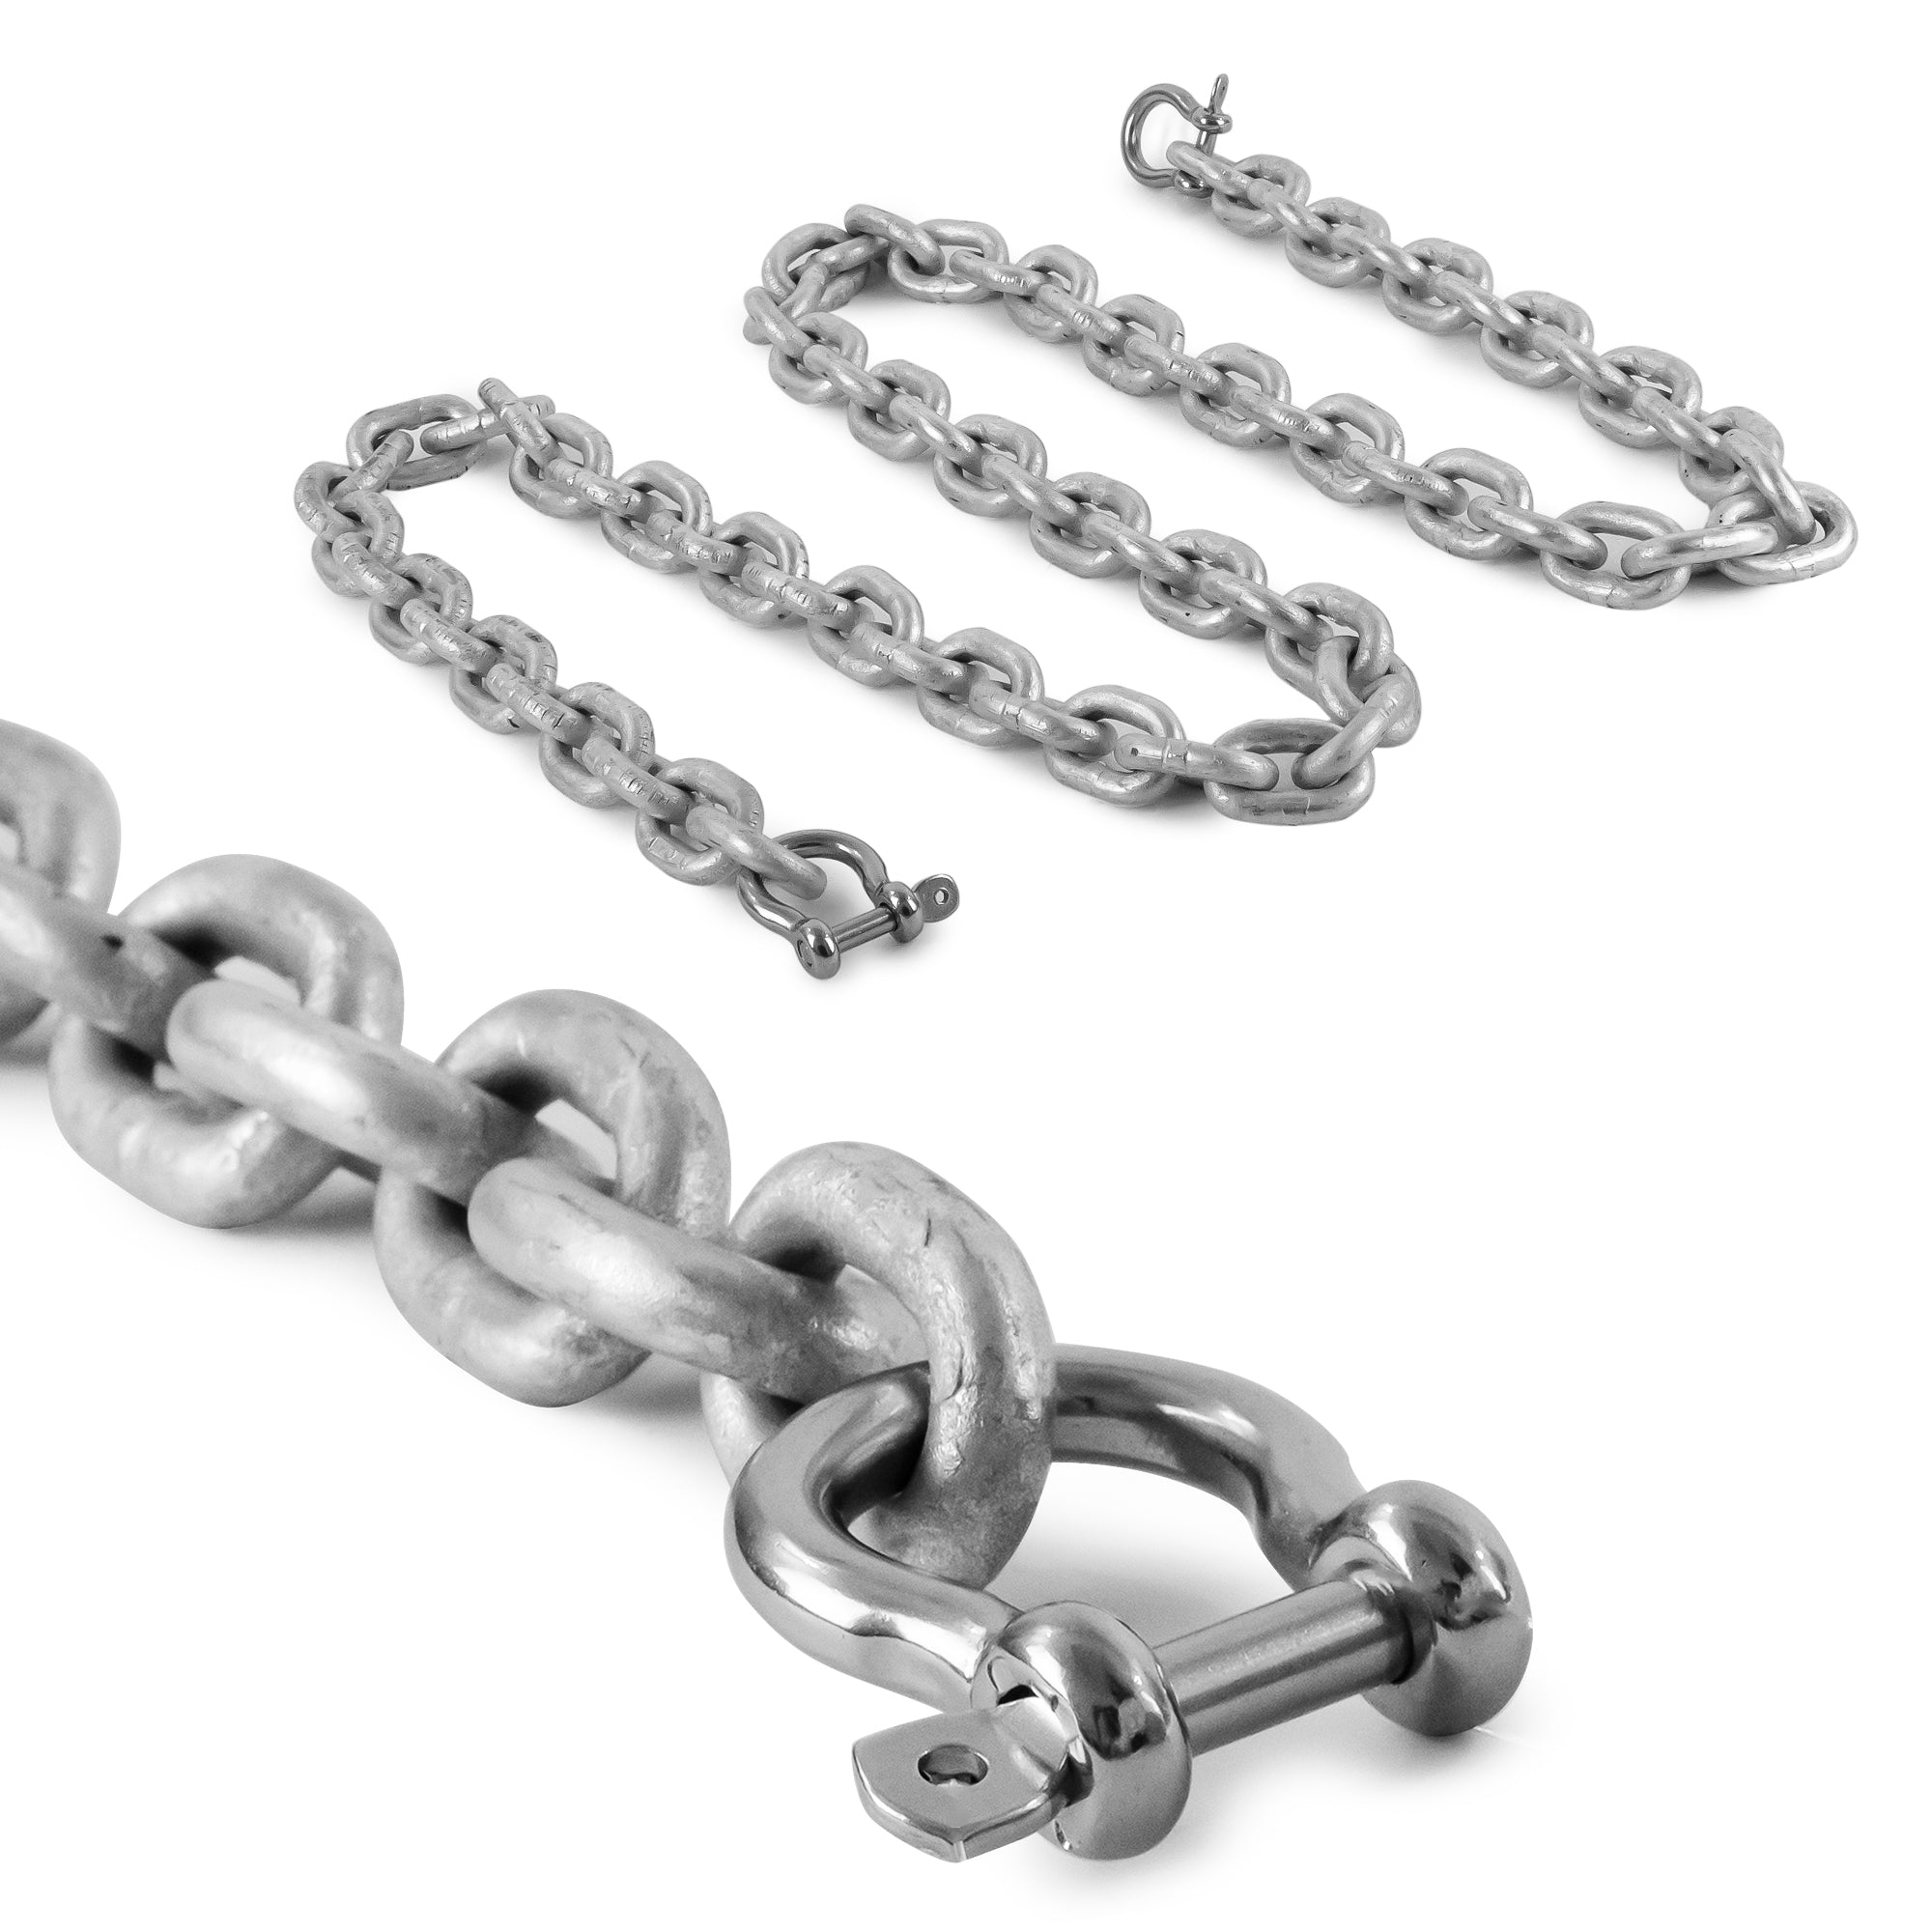 Anchor Lead Chain 1/4" x 5', HTG4 Galvanized Steel - FO4489-G5